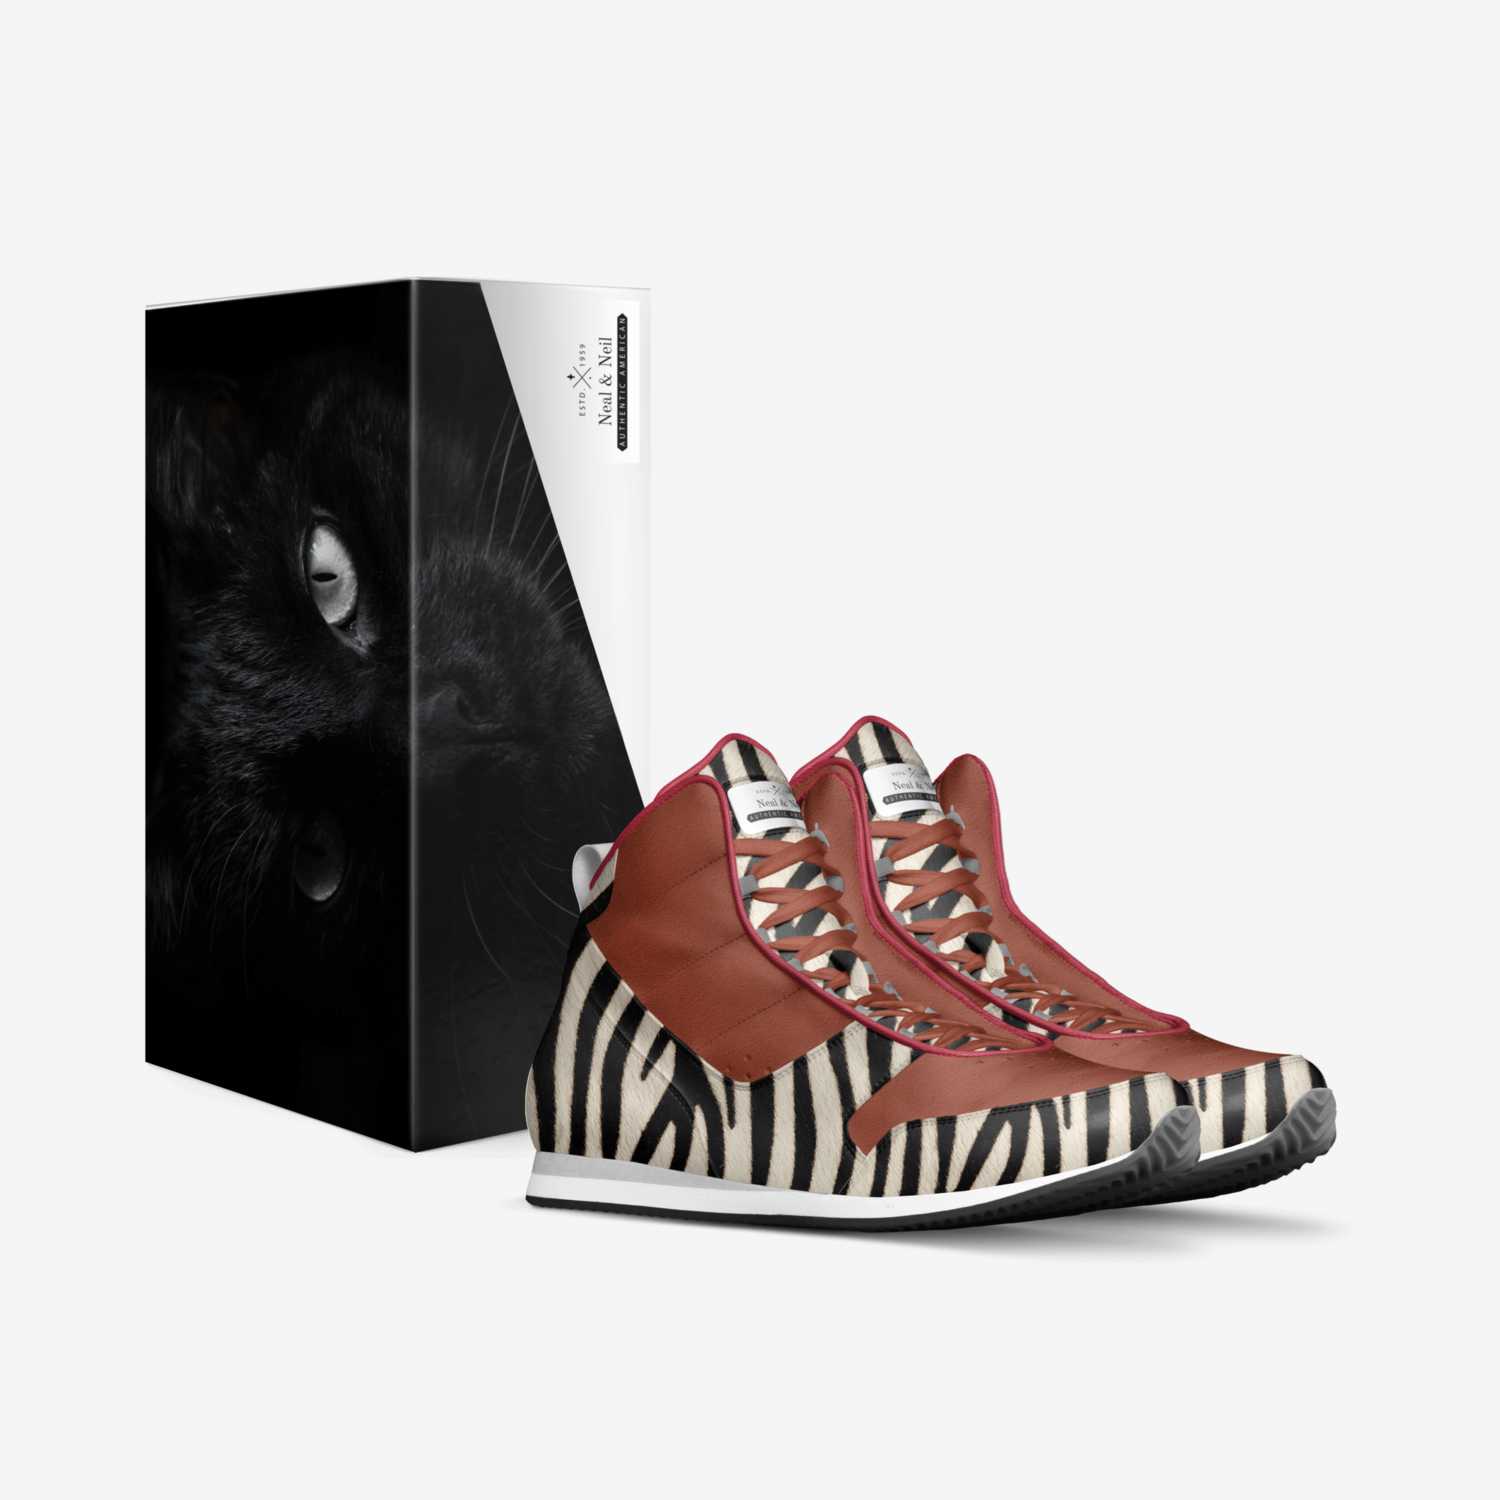 Koolin 1 custom made in Italy shoes by Cornelius Newsom | Box view